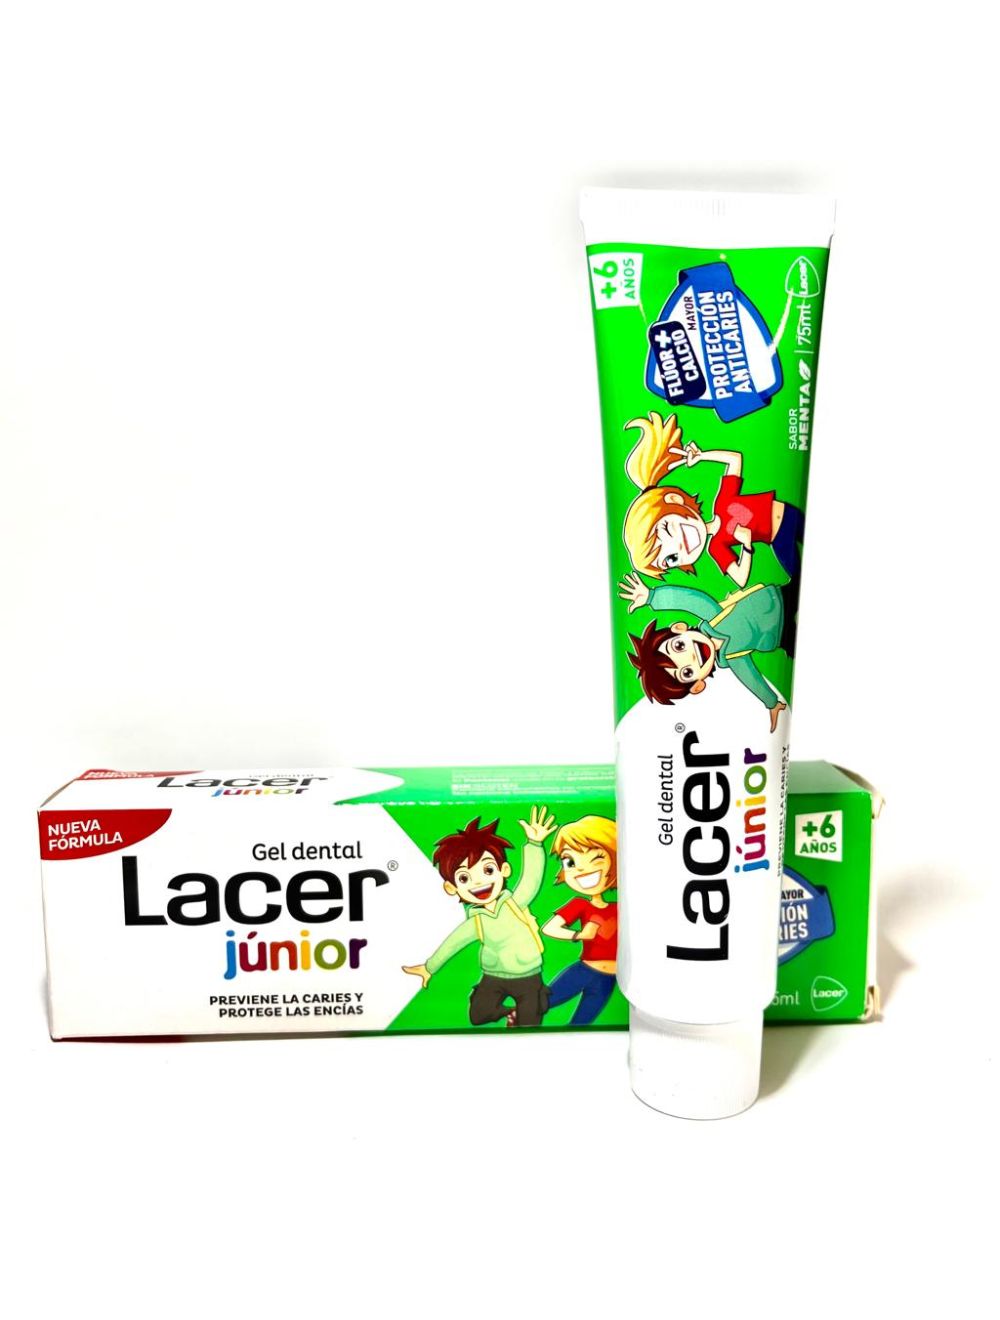 Lacer junior gel dental. 75 ml.